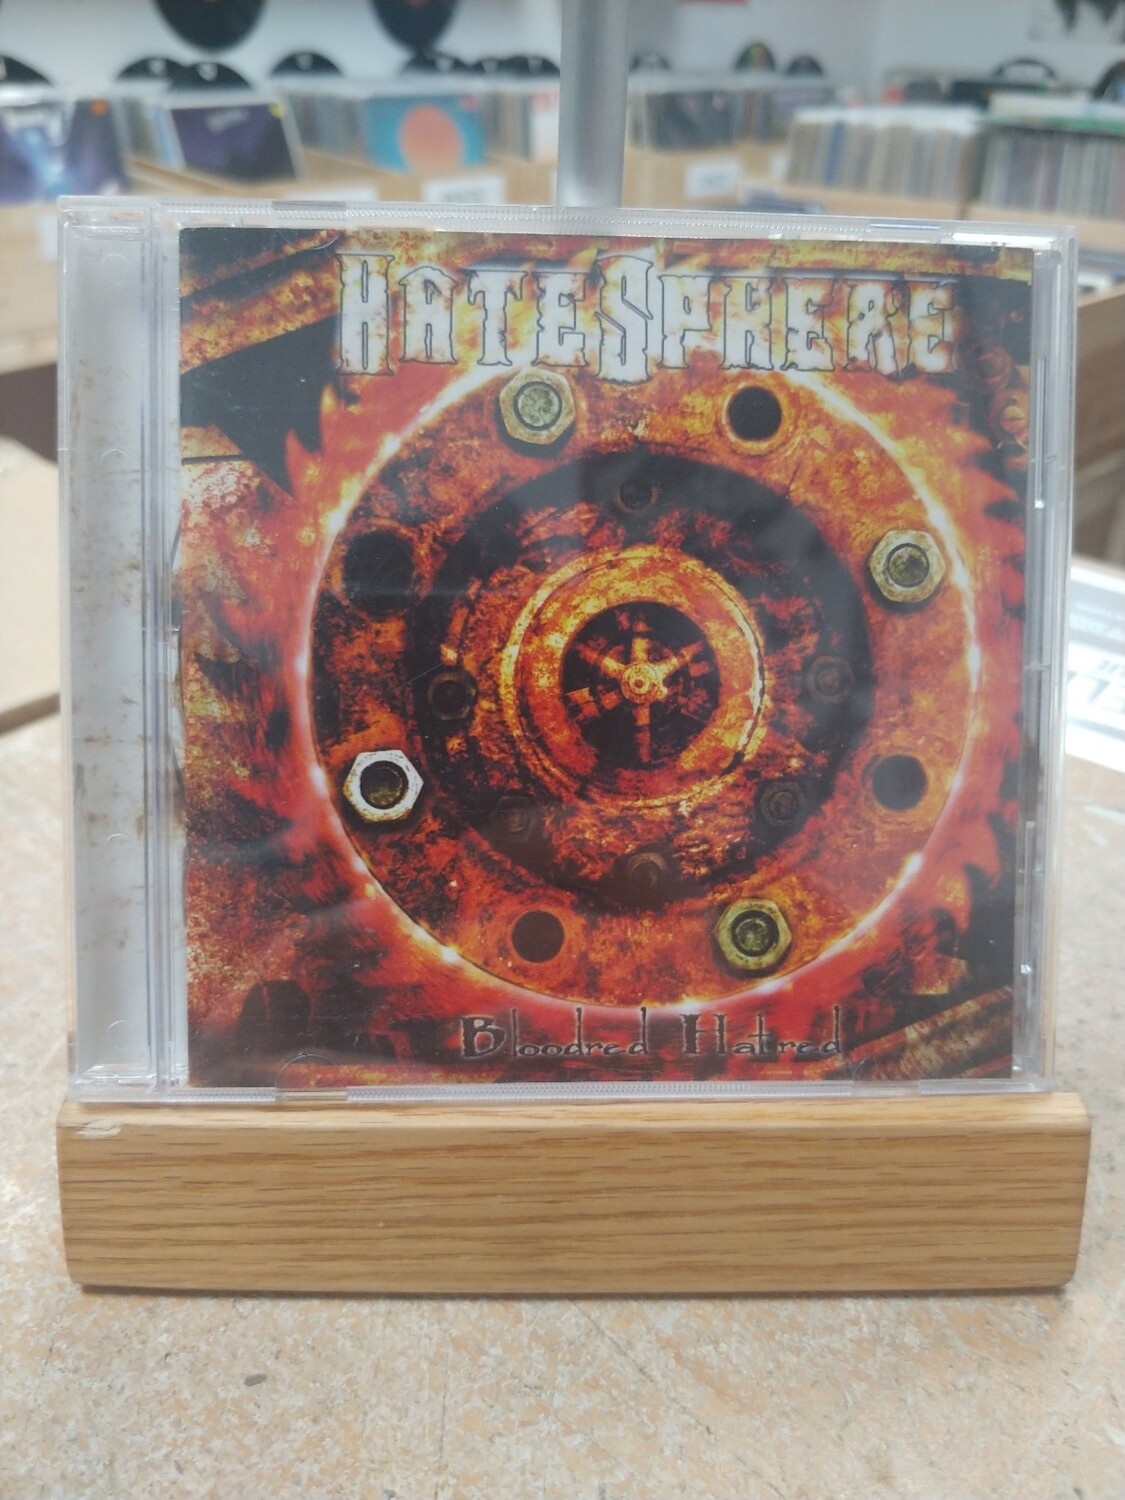 Hatesphere - Bloodred Hatred (CD)